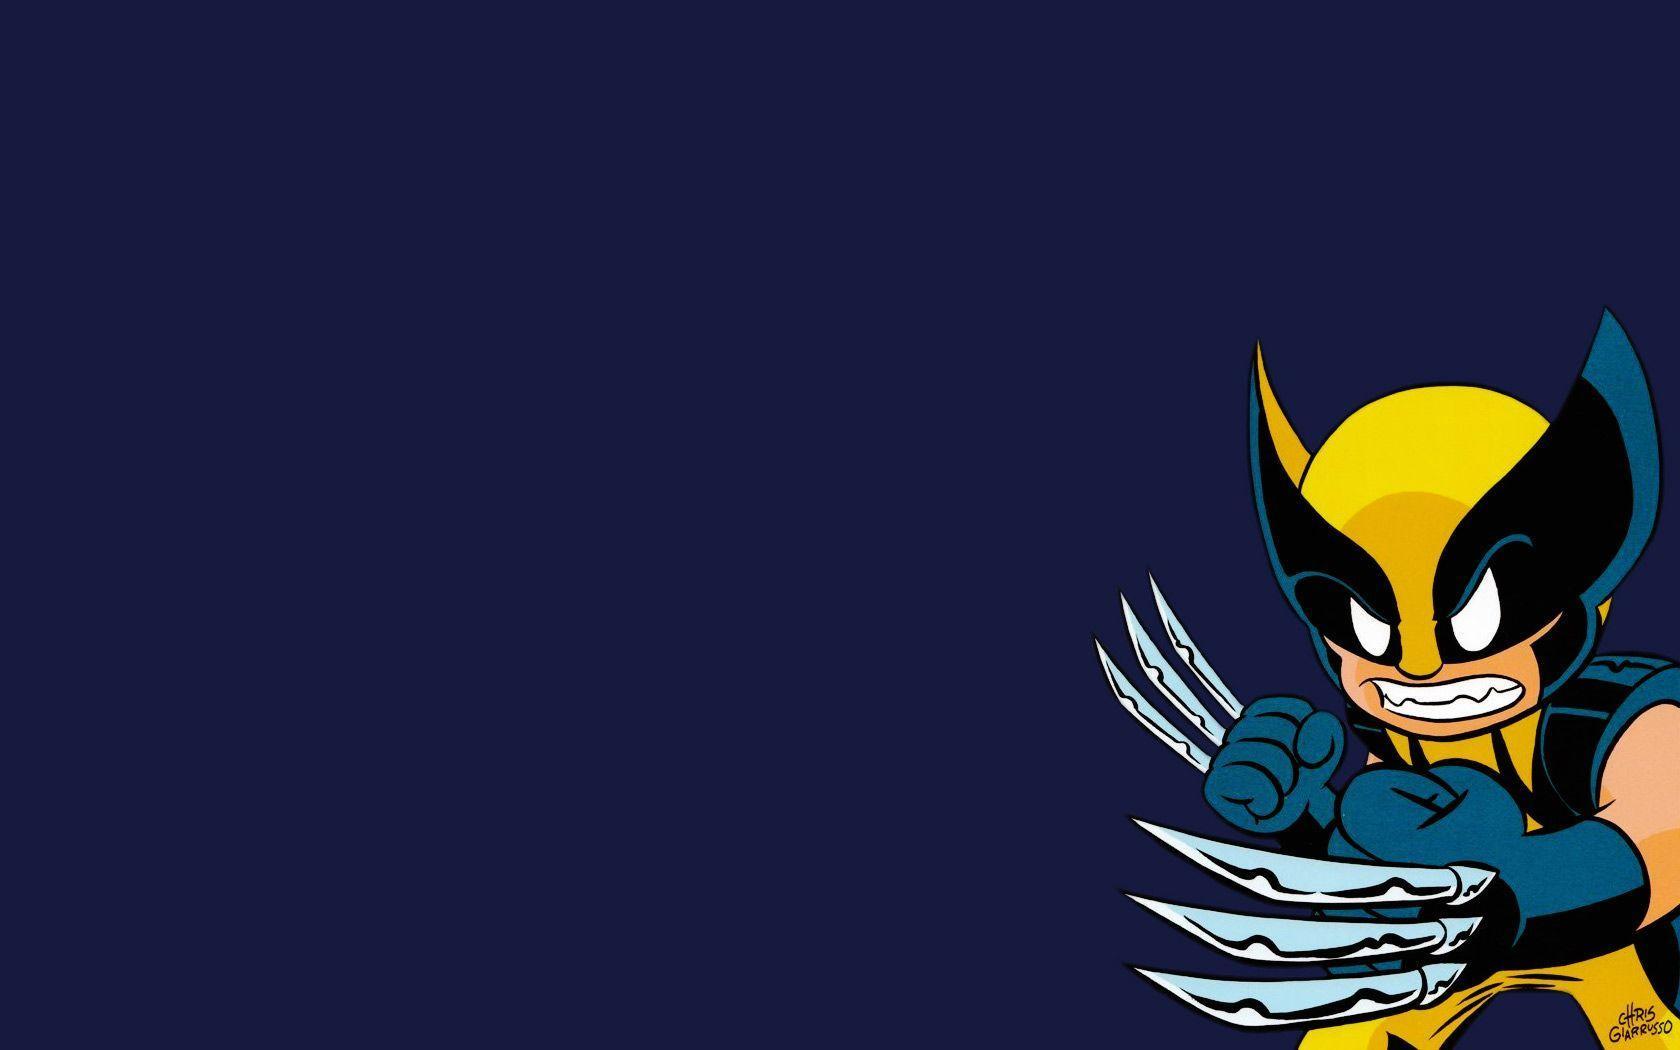 X-Men Wolverine MARVEL CoC Wallpapers